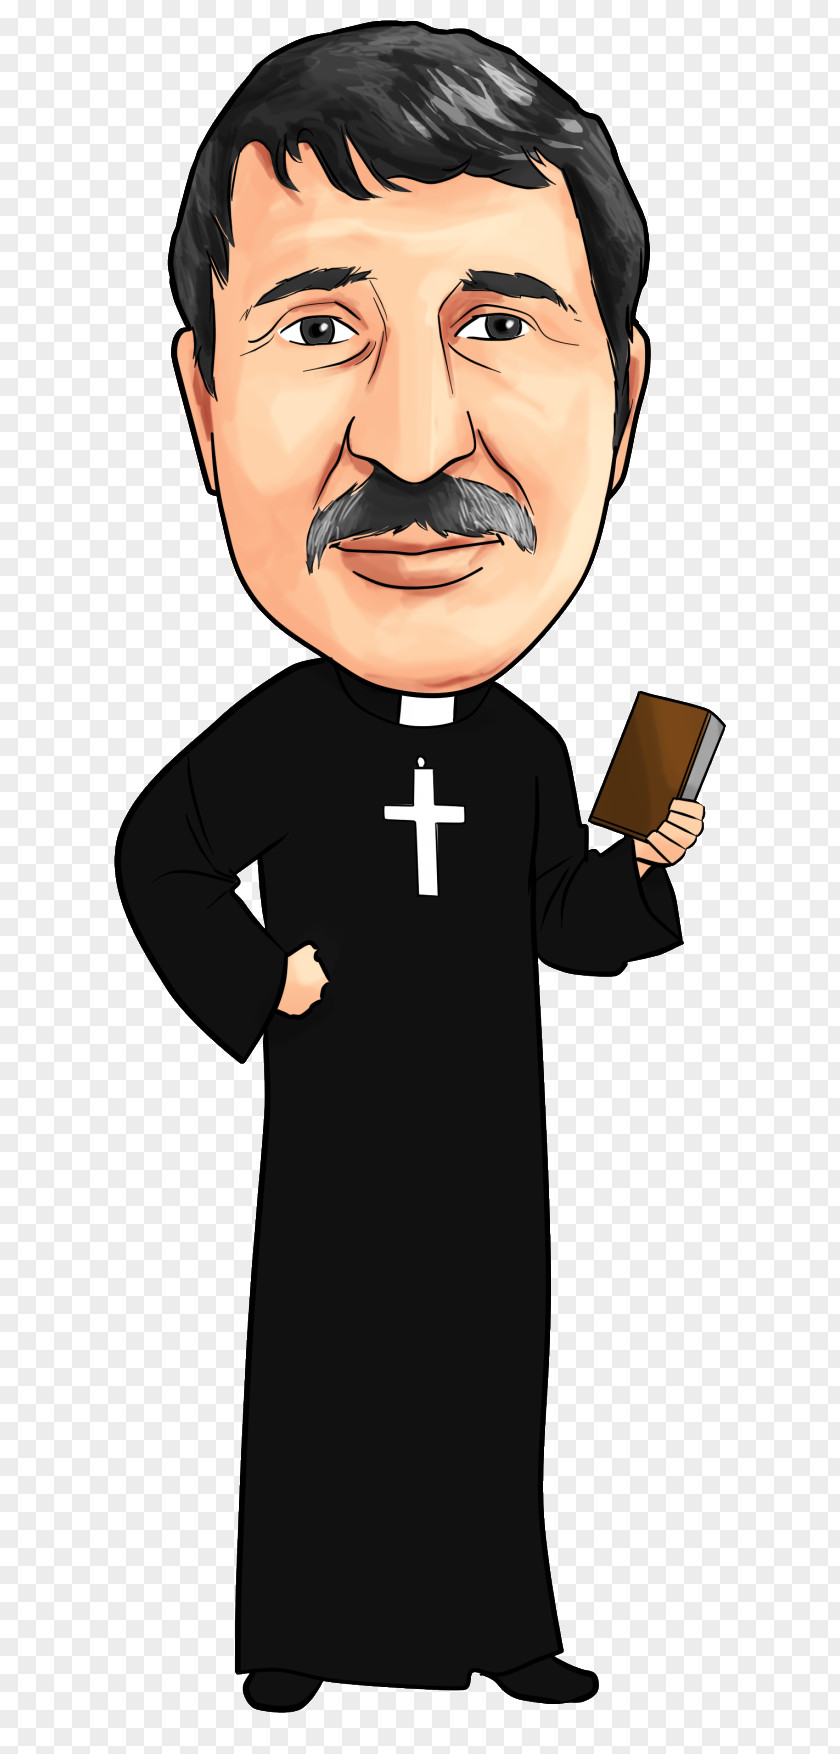 Priest Cartoon Caricature PNG